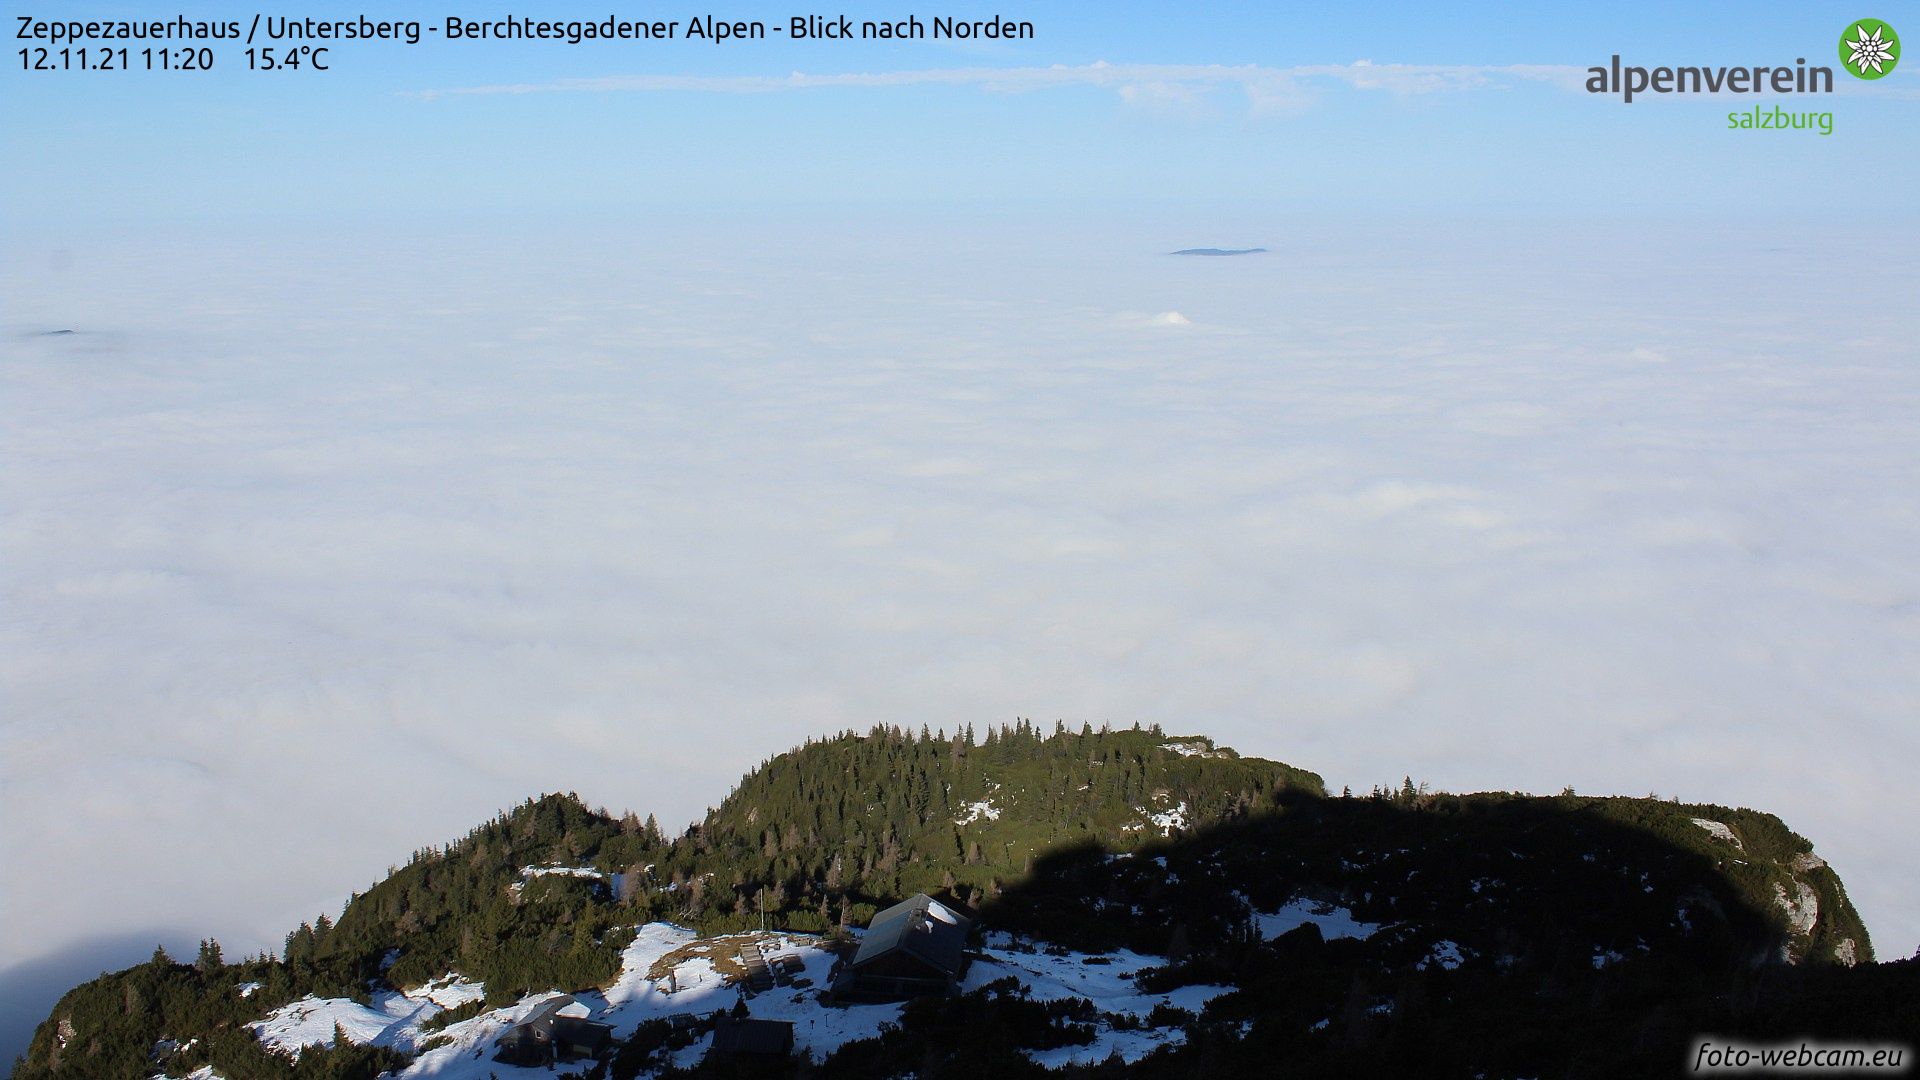 A nice inversion near Salzburg (foto-webcam.eu)